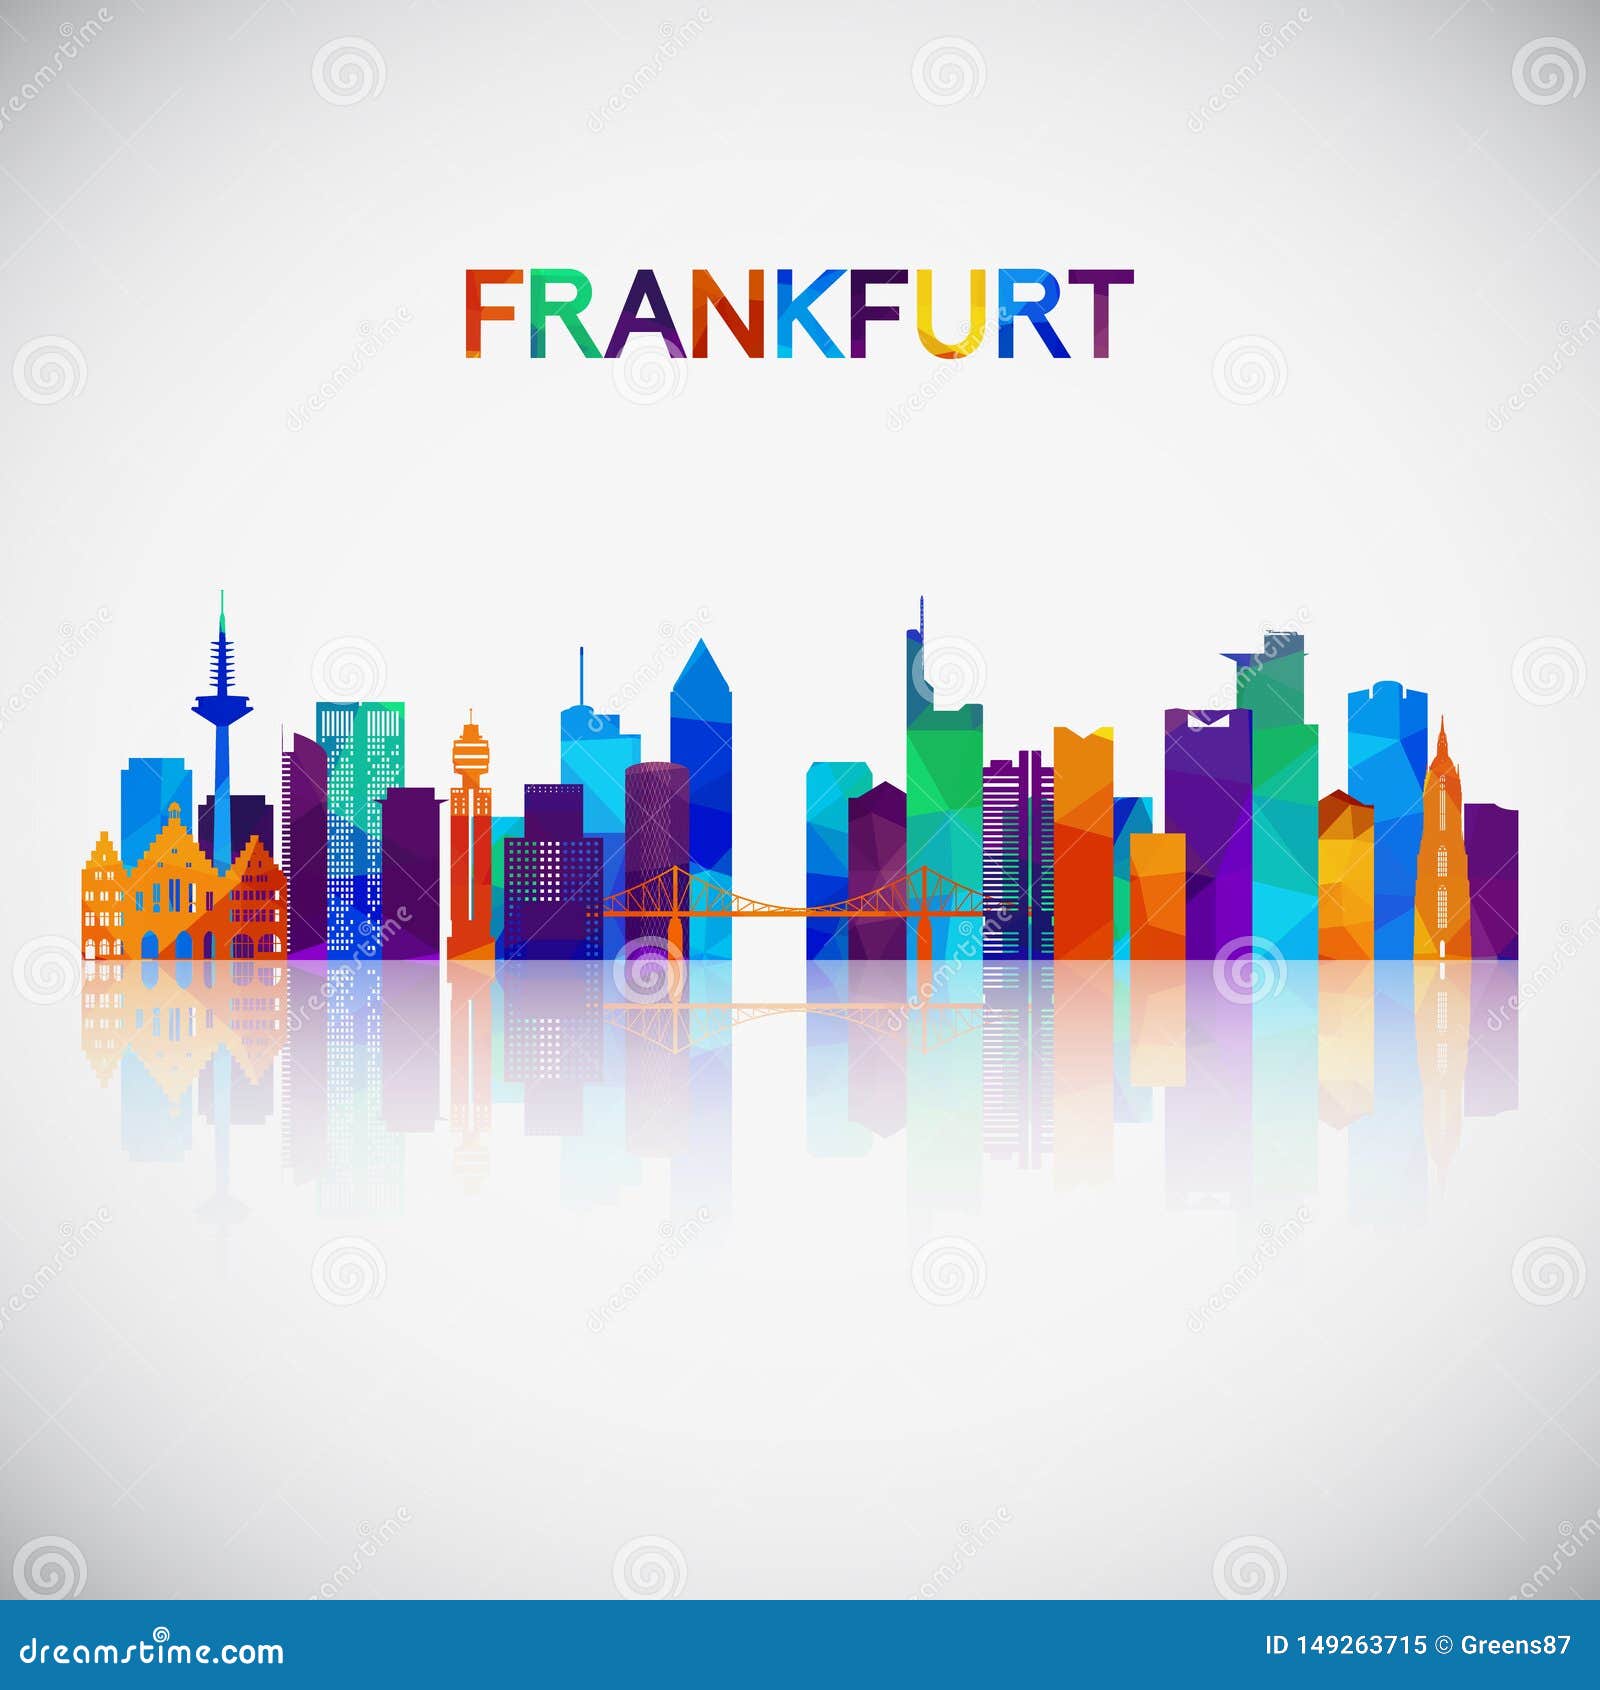 frankfurt skyline silhouette in colorful geometric style.